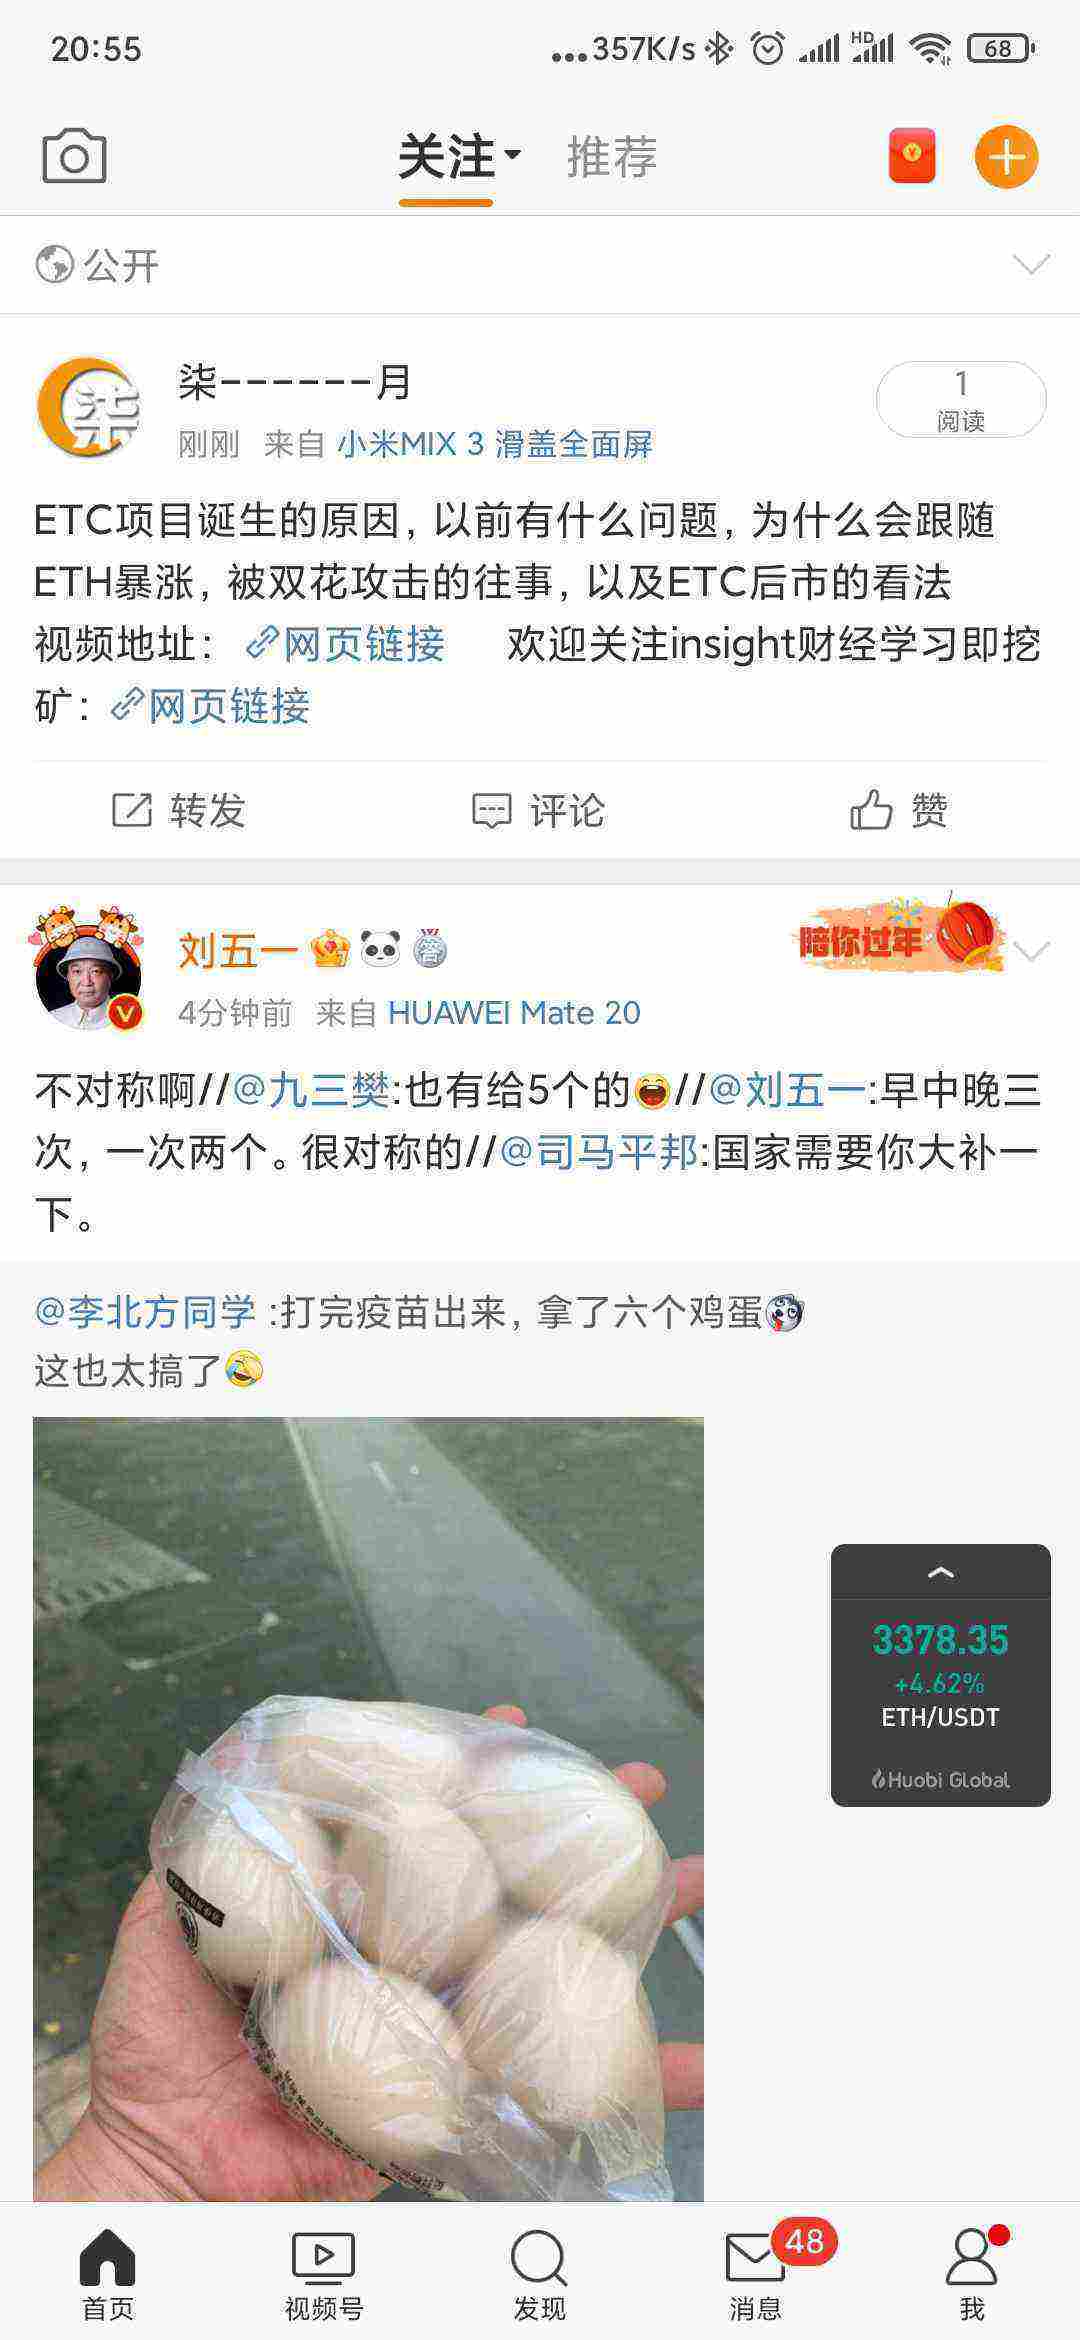 Screenshot_2021-05-05-20-55-51-550_com.sina.weibo.jpg